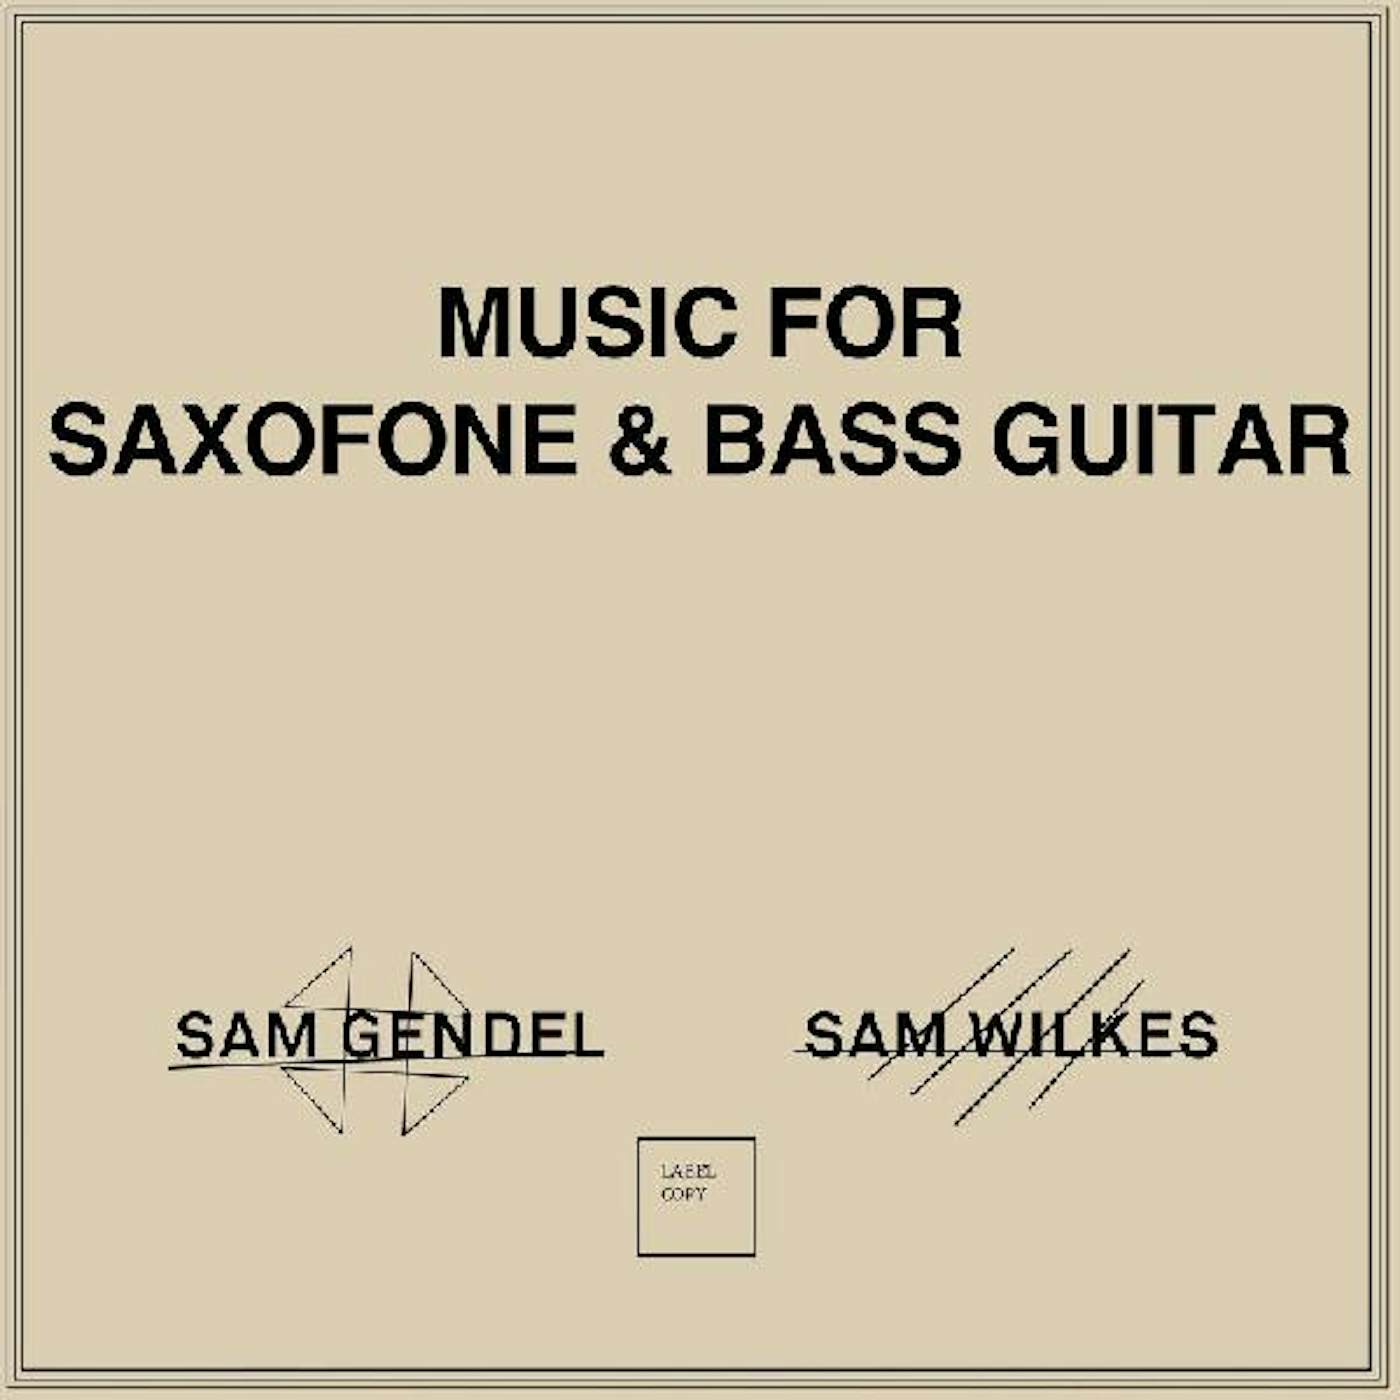 Sam Gendel / Sam Wilkes Music For Saxofone & Bass Guitar Vinyl Record